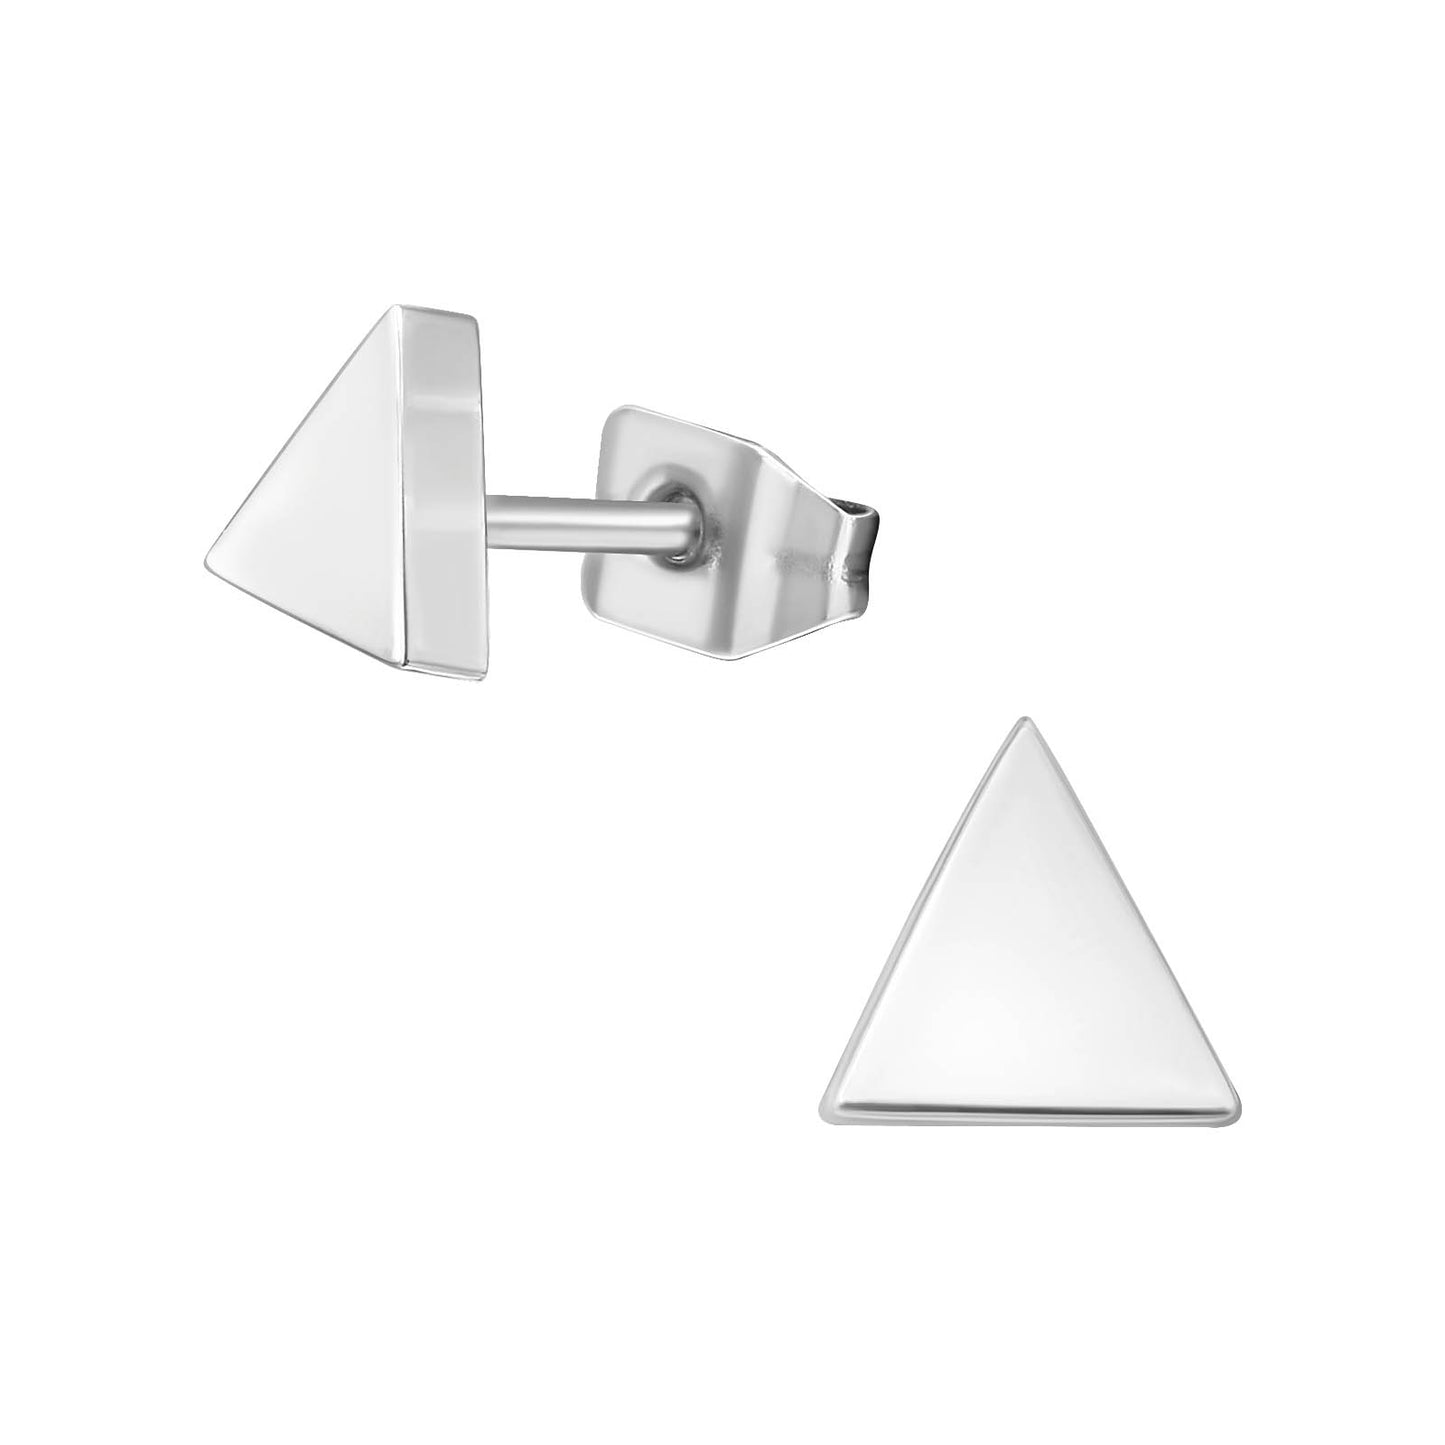 Titanium Triangle Studs: Push Back Earrings For Sensitive Ears